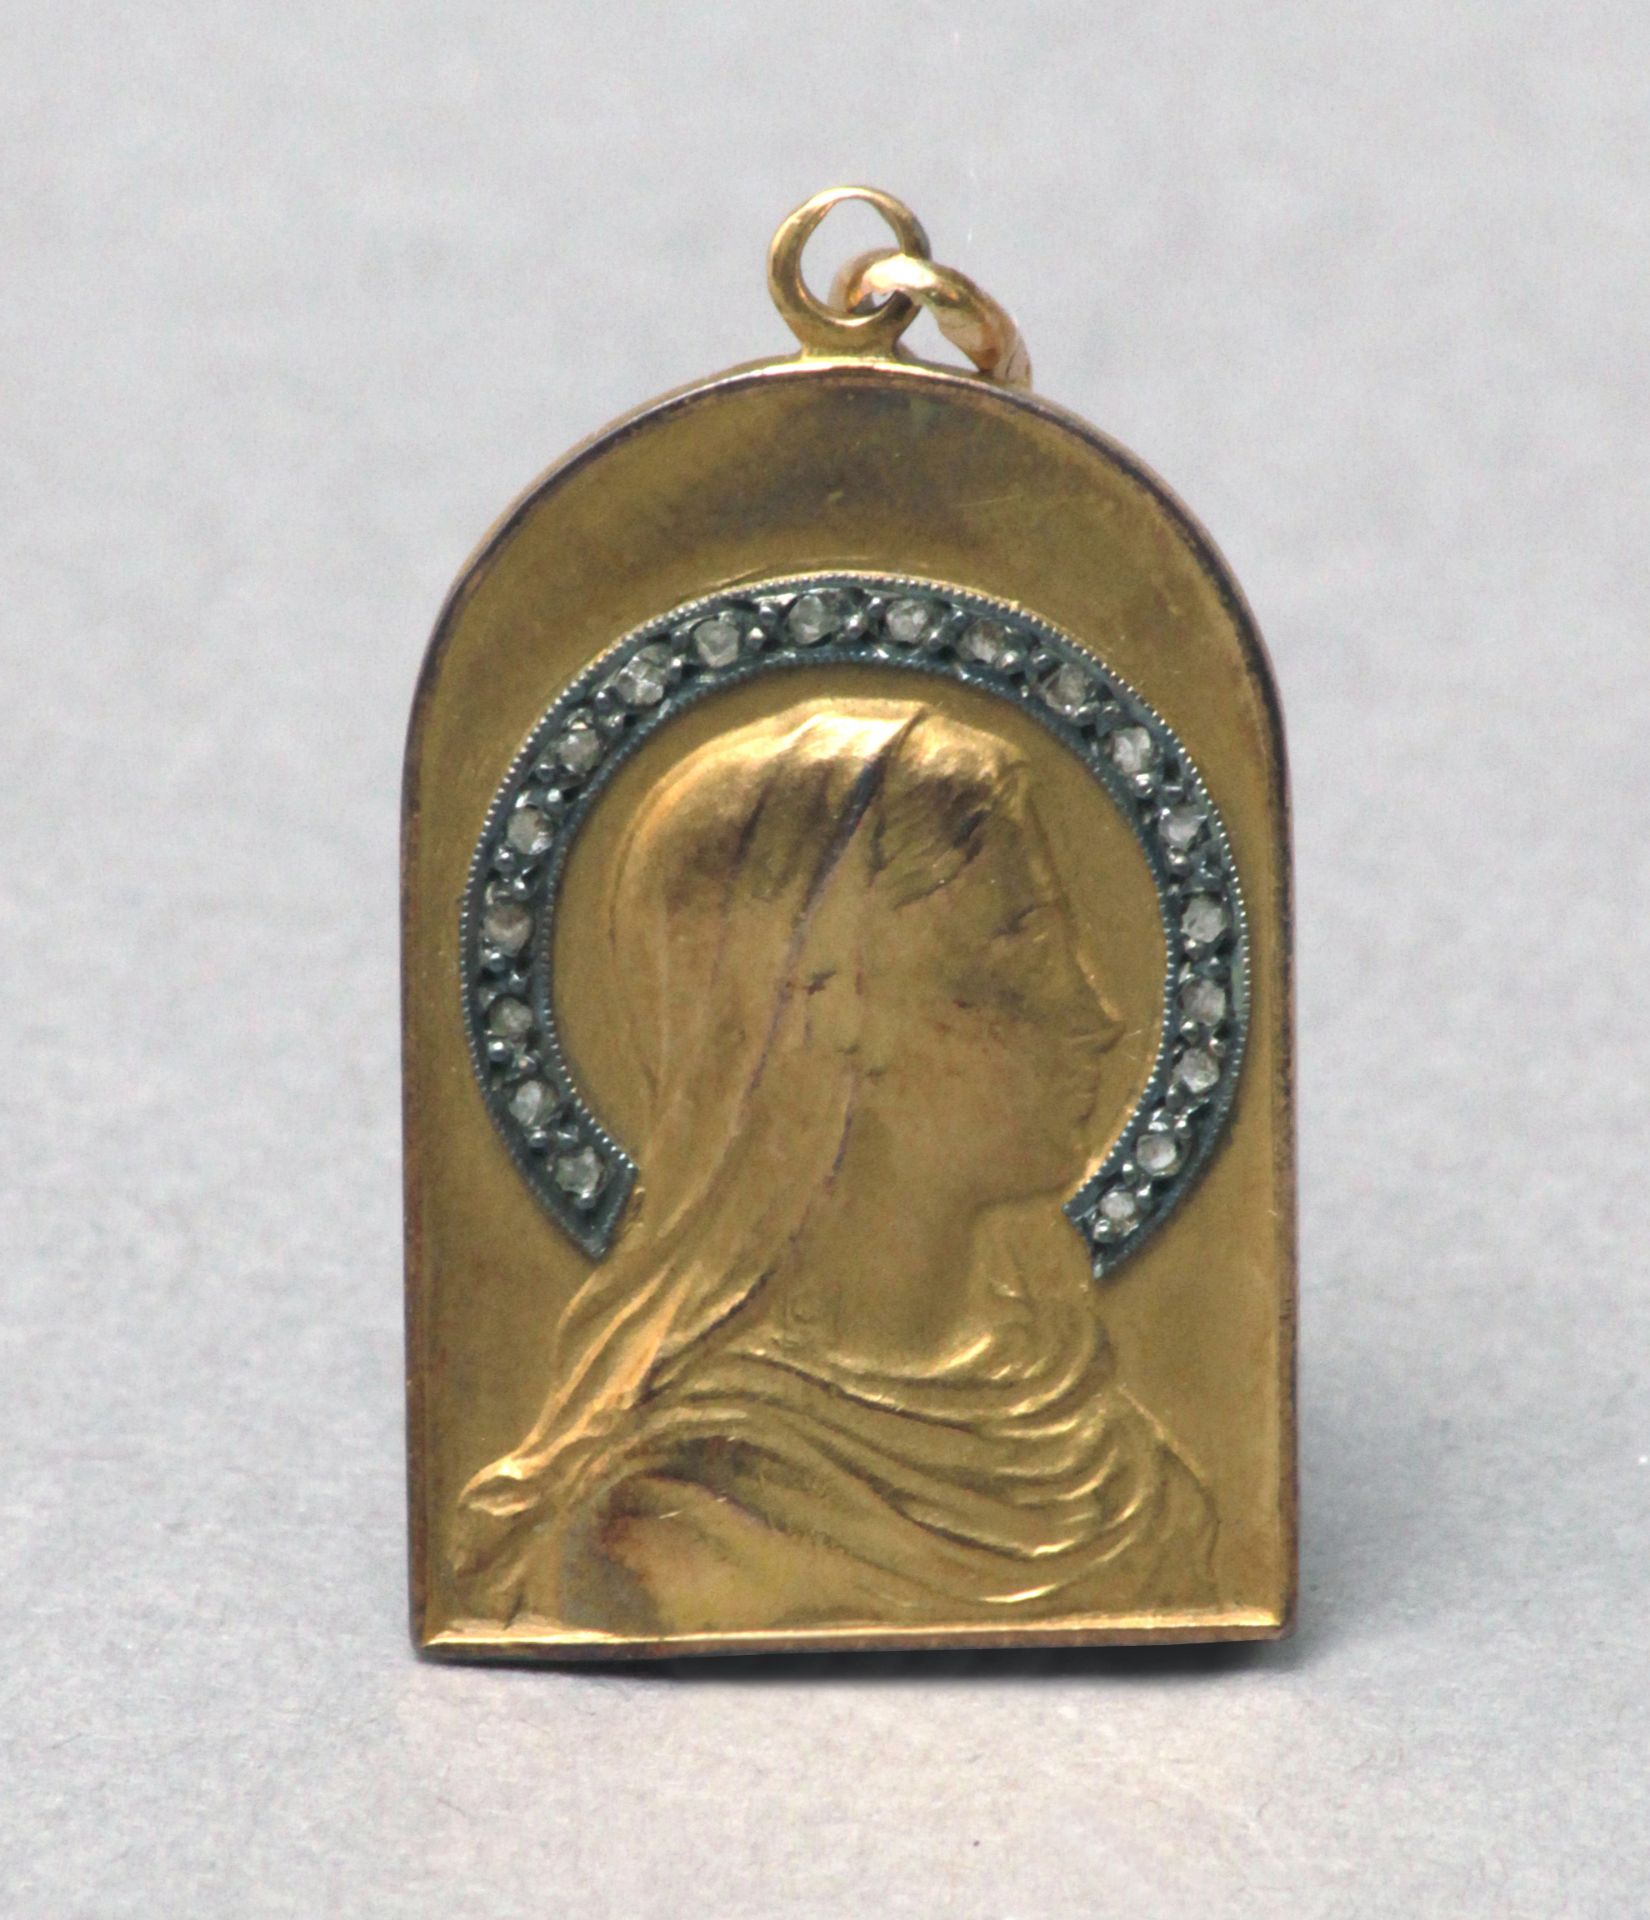 A devotional medal circa 1919